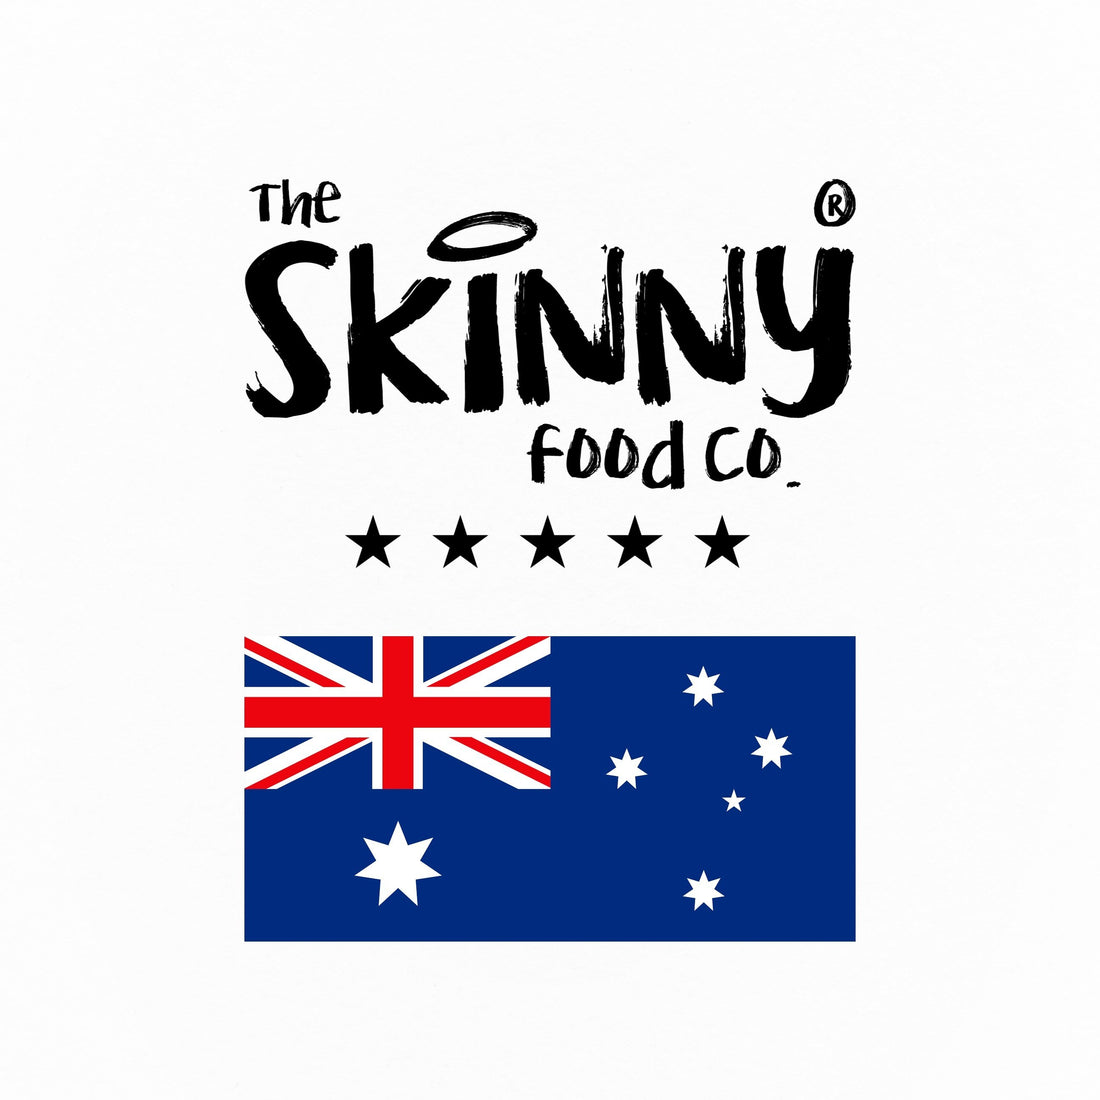 Lancement de Skinny Food Co en Australie ! - theskinnyfoodco